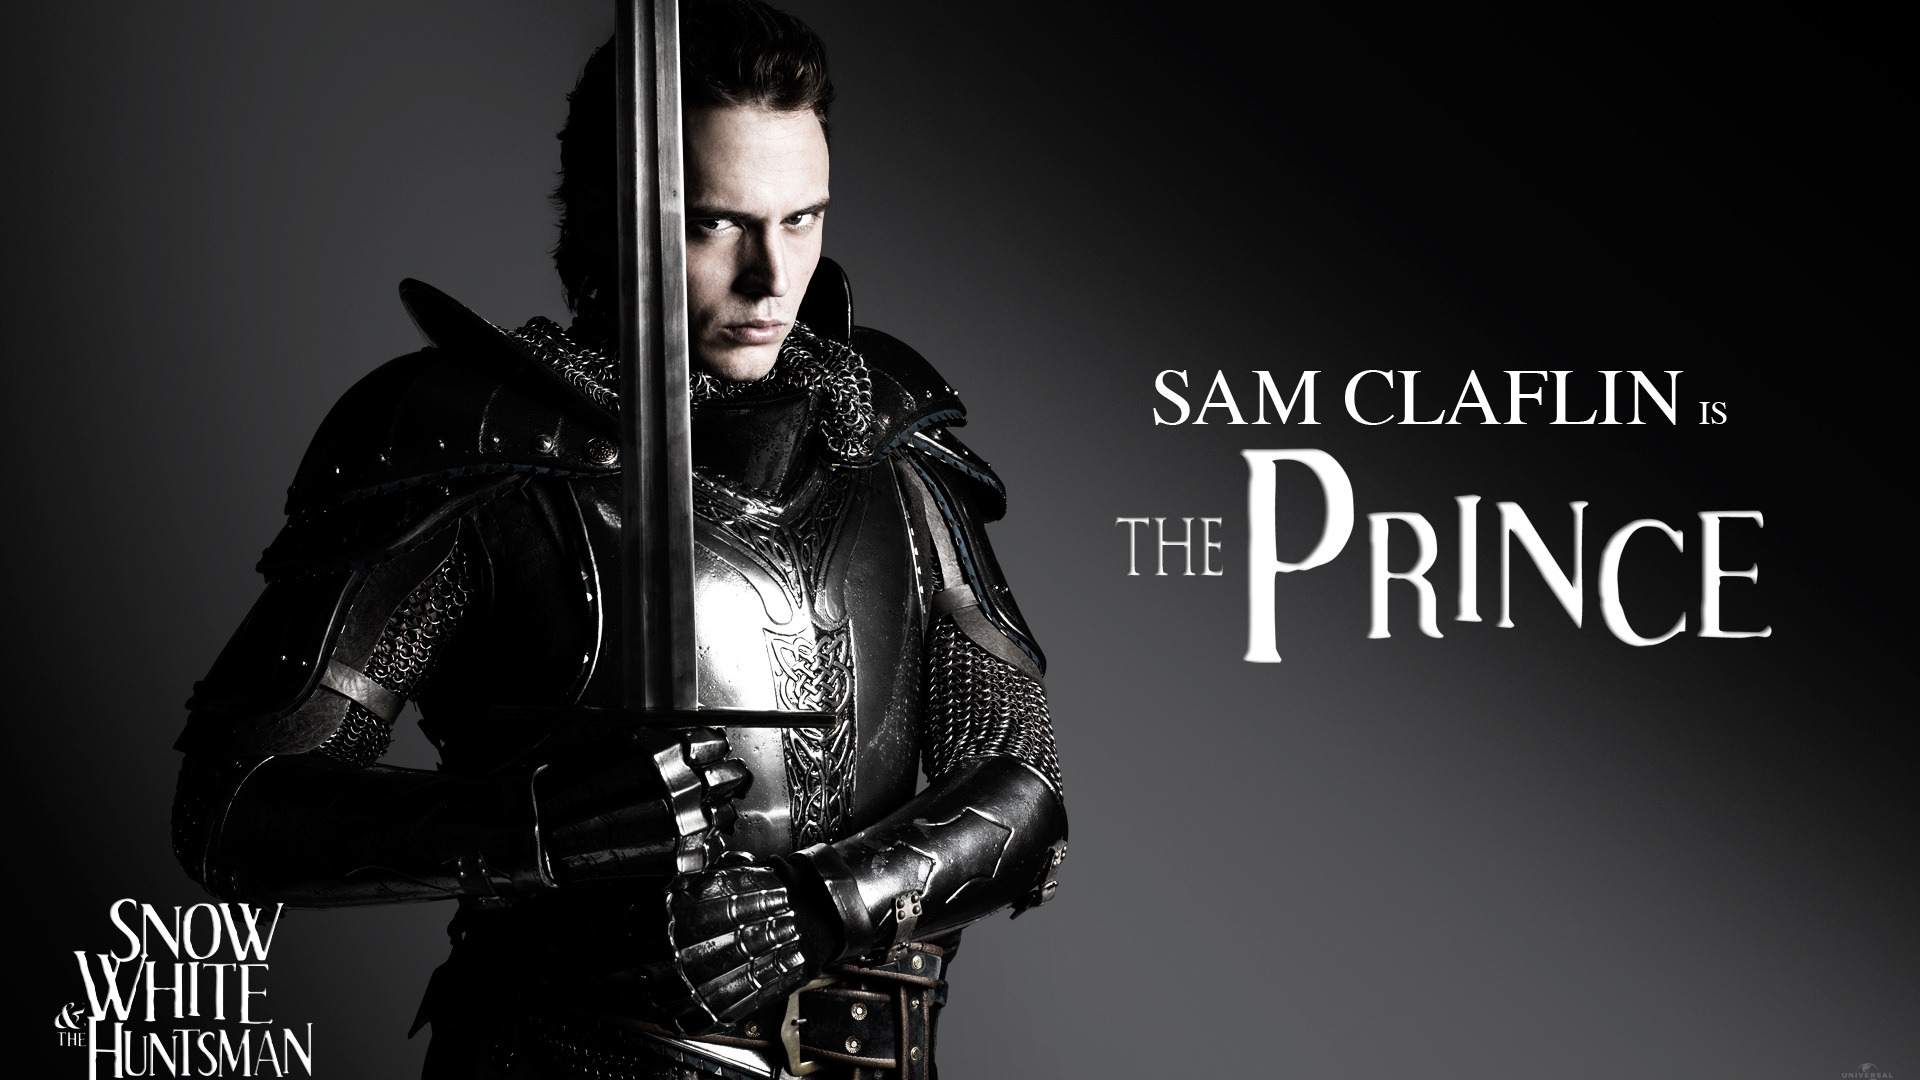 Sam Claflin The Prince for 1920 x 1080 HDTV 1080p resolution